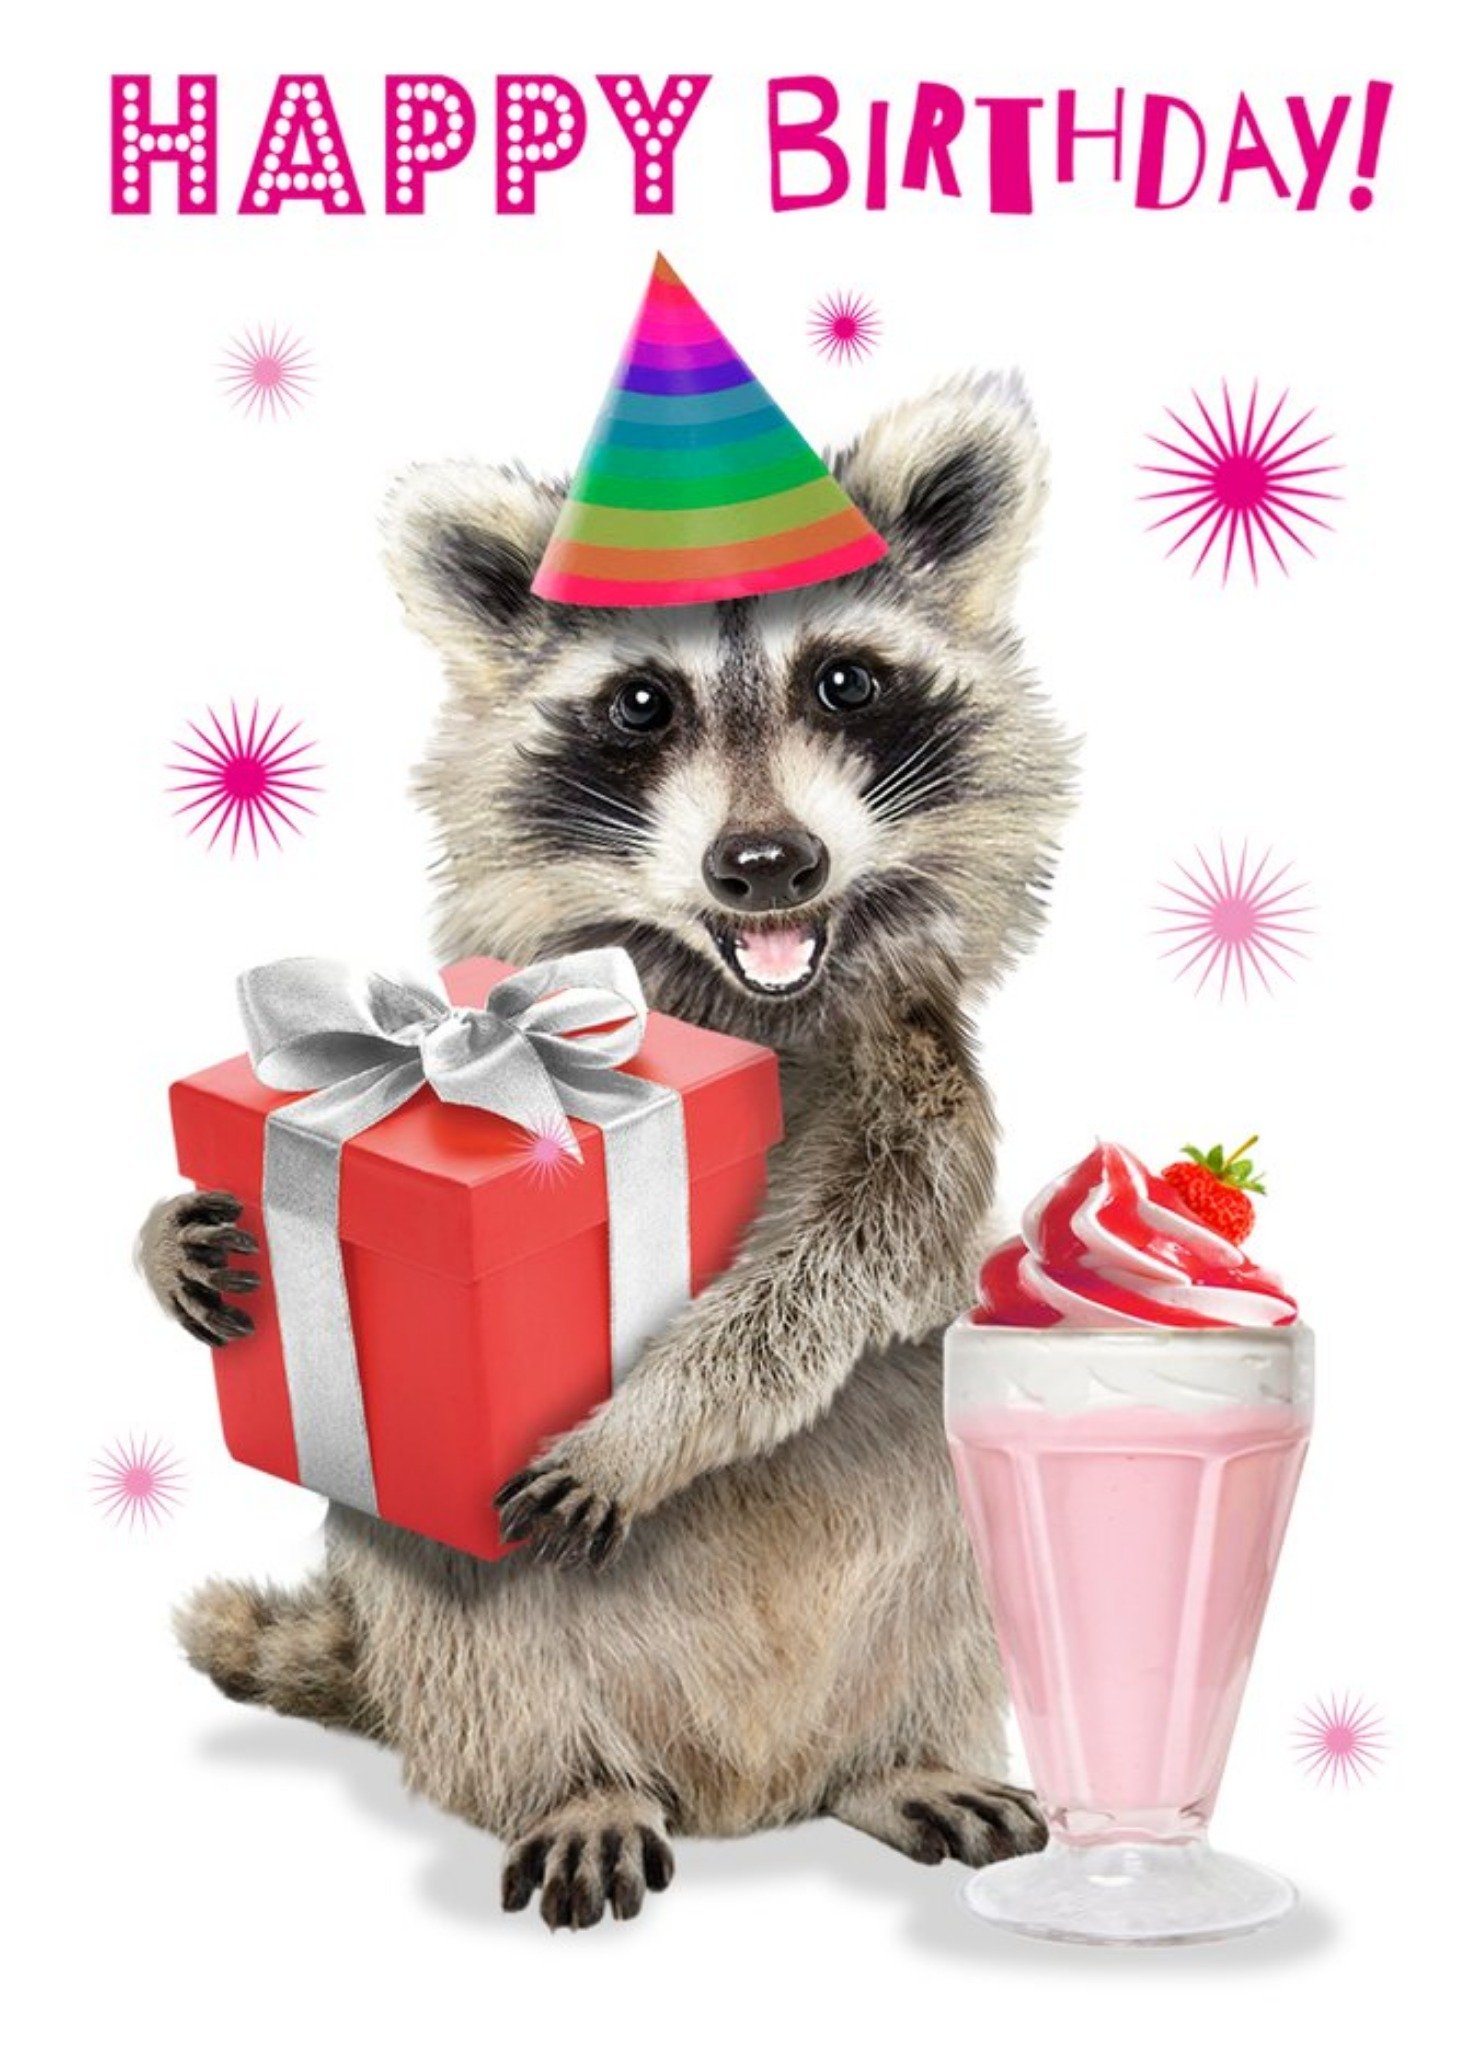 Moonpig Cute Racoon Holding Present With Ice Cream Sundae Birthday Card, Large